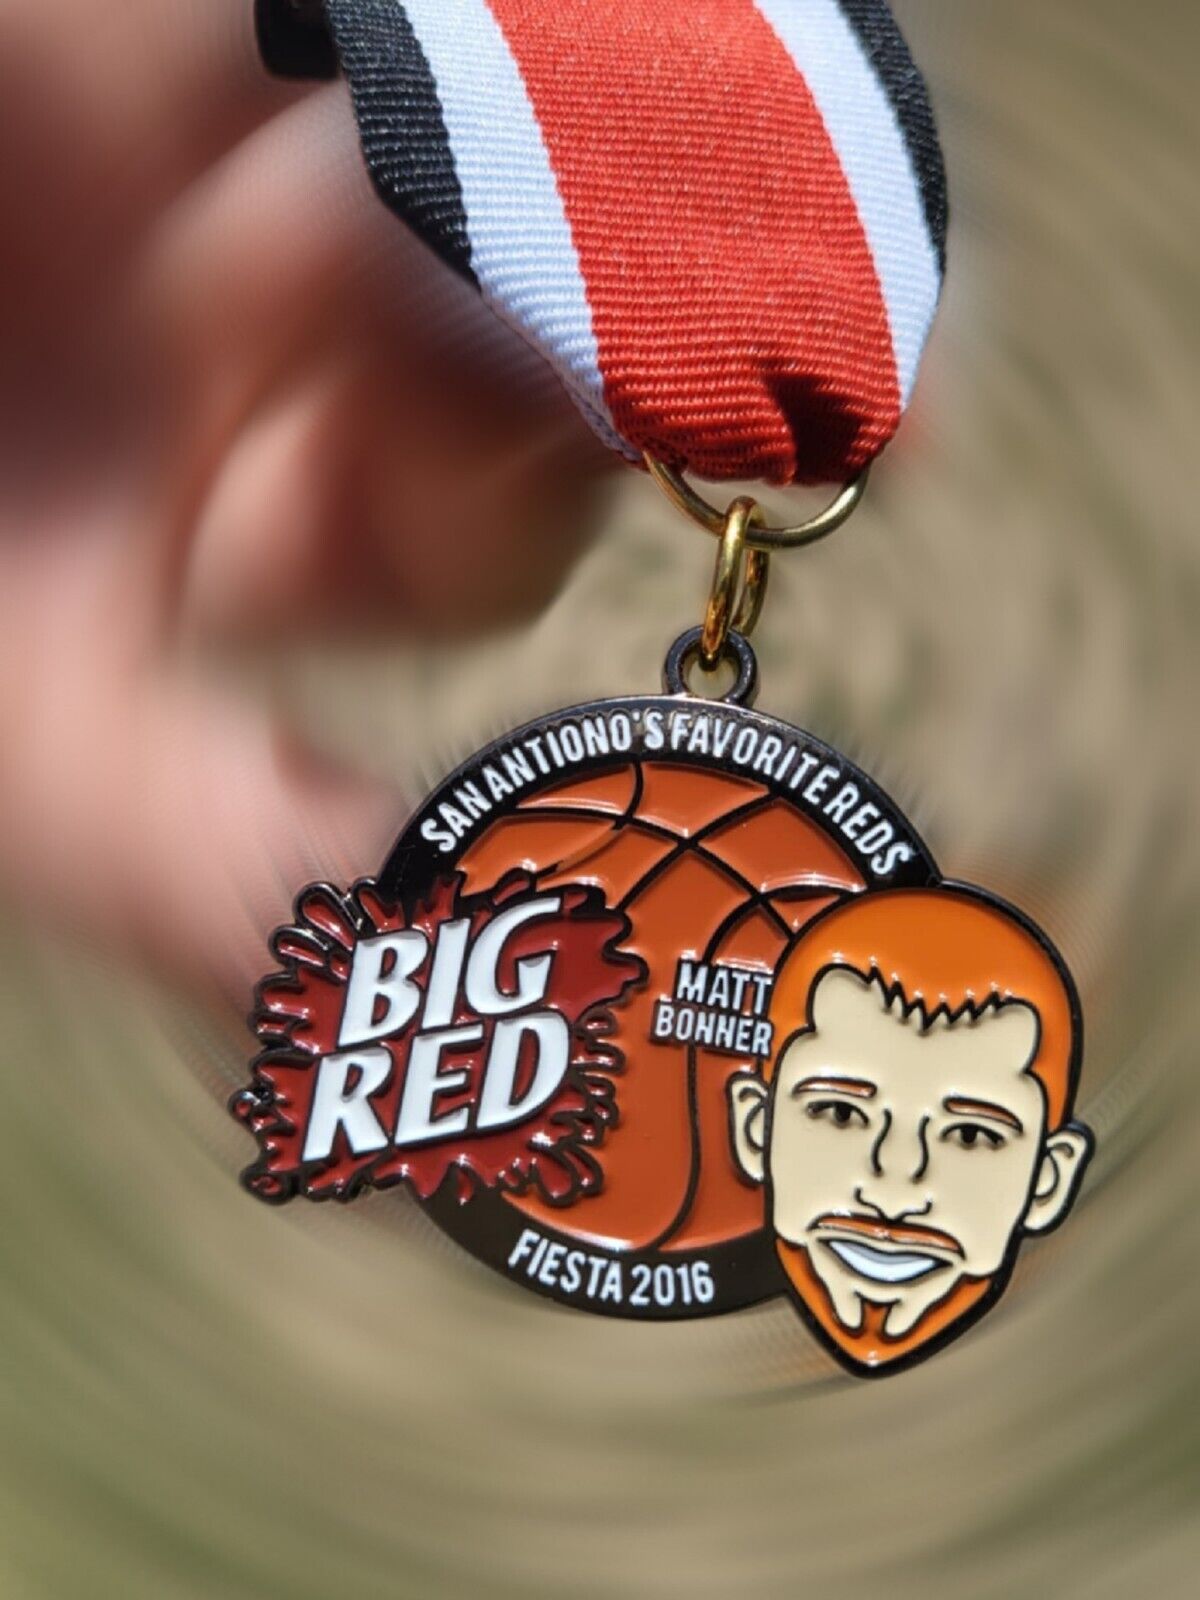 Big Red/ Matt Bonner Fiesta Medal